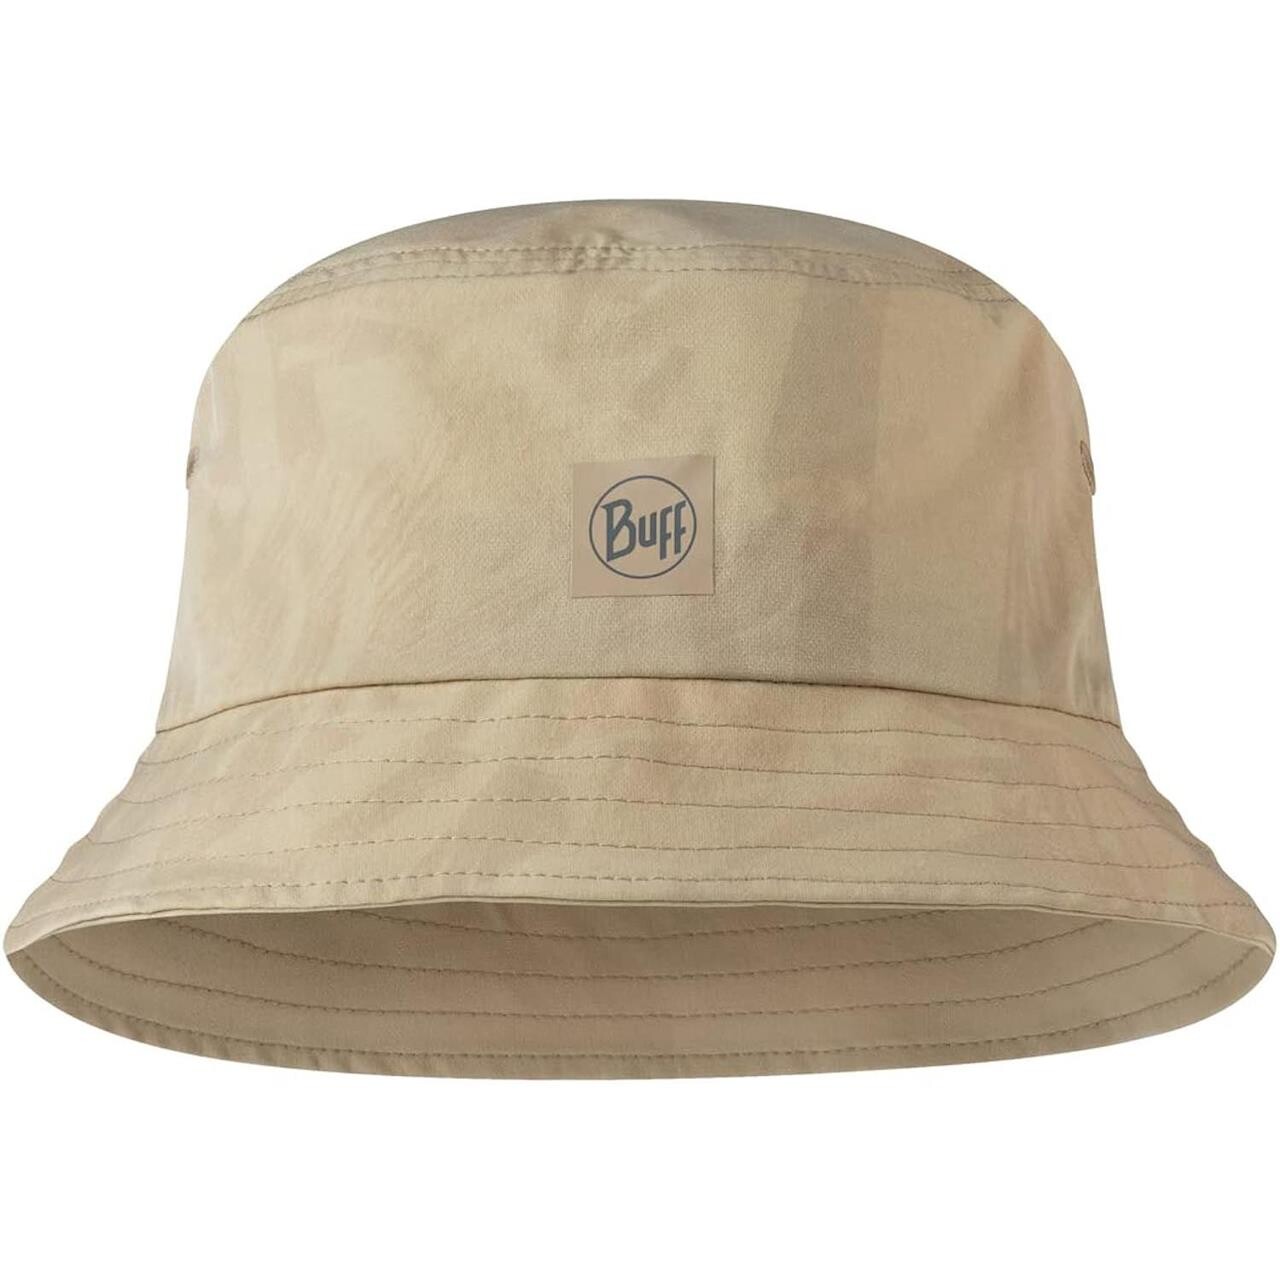 Buff Adventure Bucket Hat (Beige (ACAI SAND) Large/x-large)